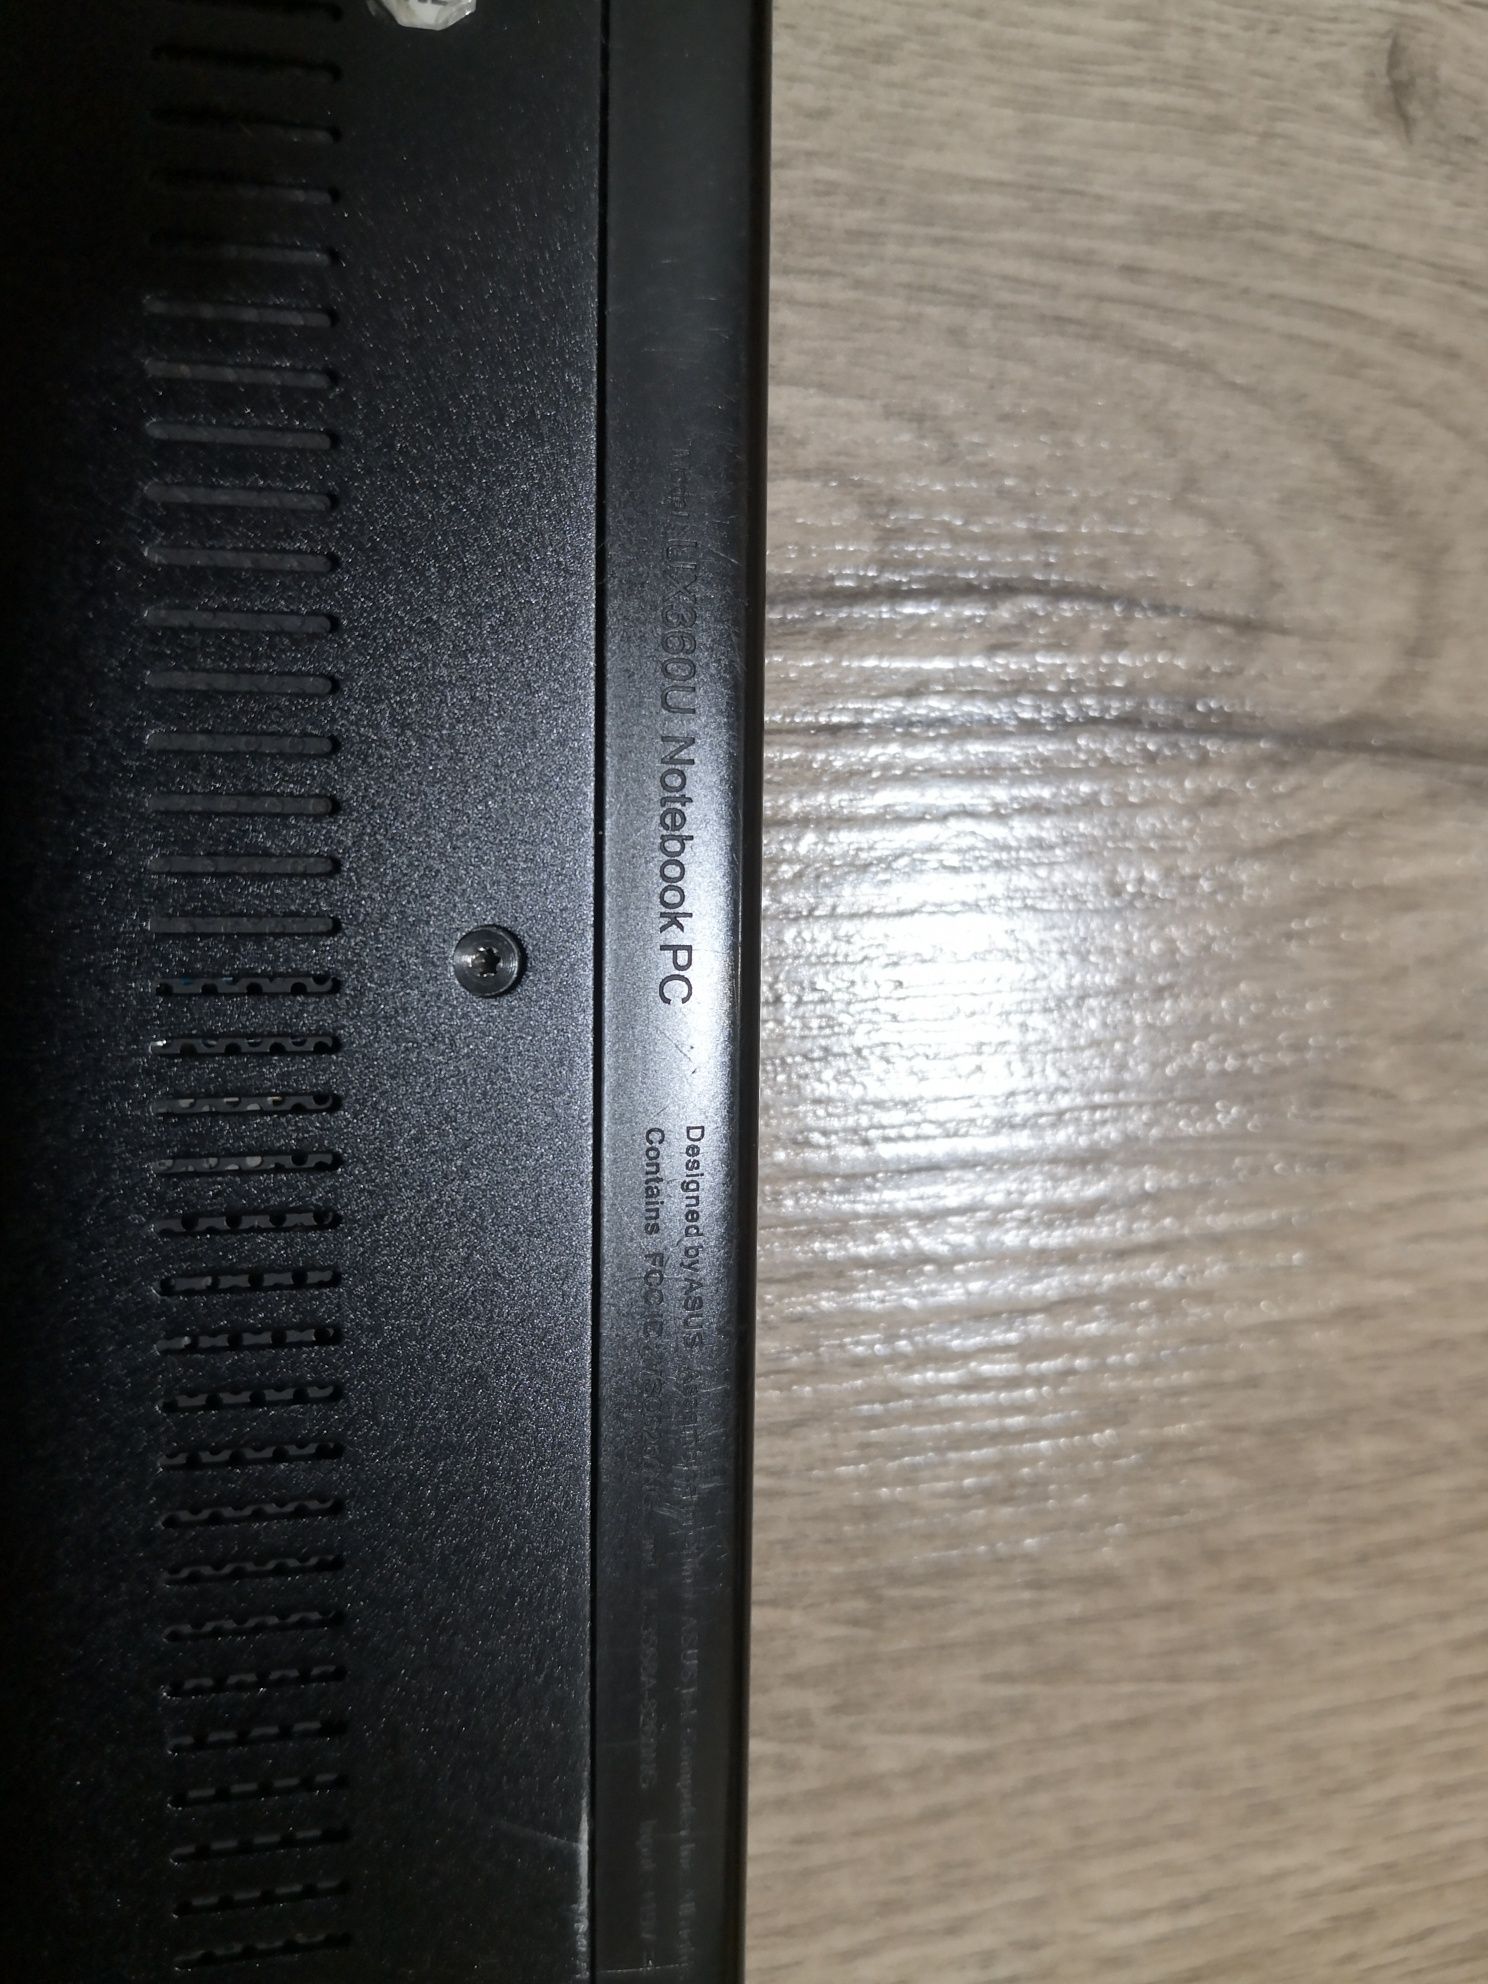 Asus Zenbook flip ux360u